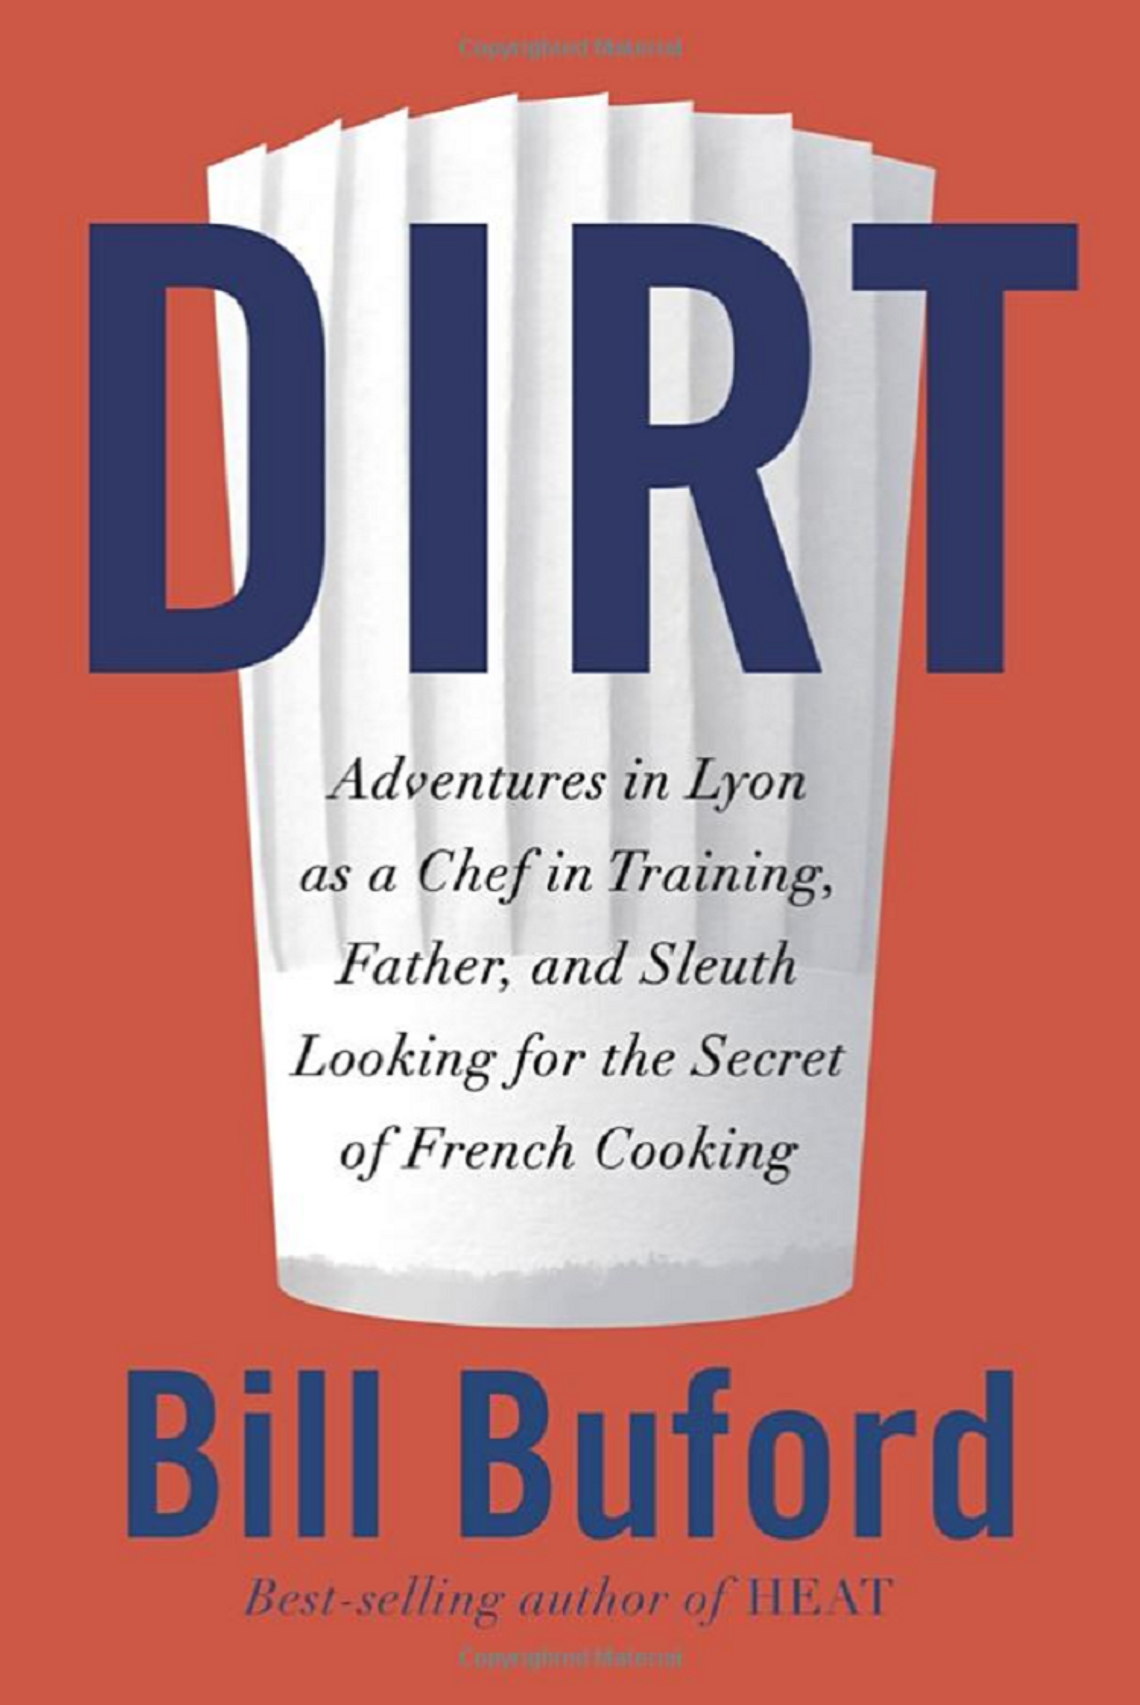 Book Review -- Dirt